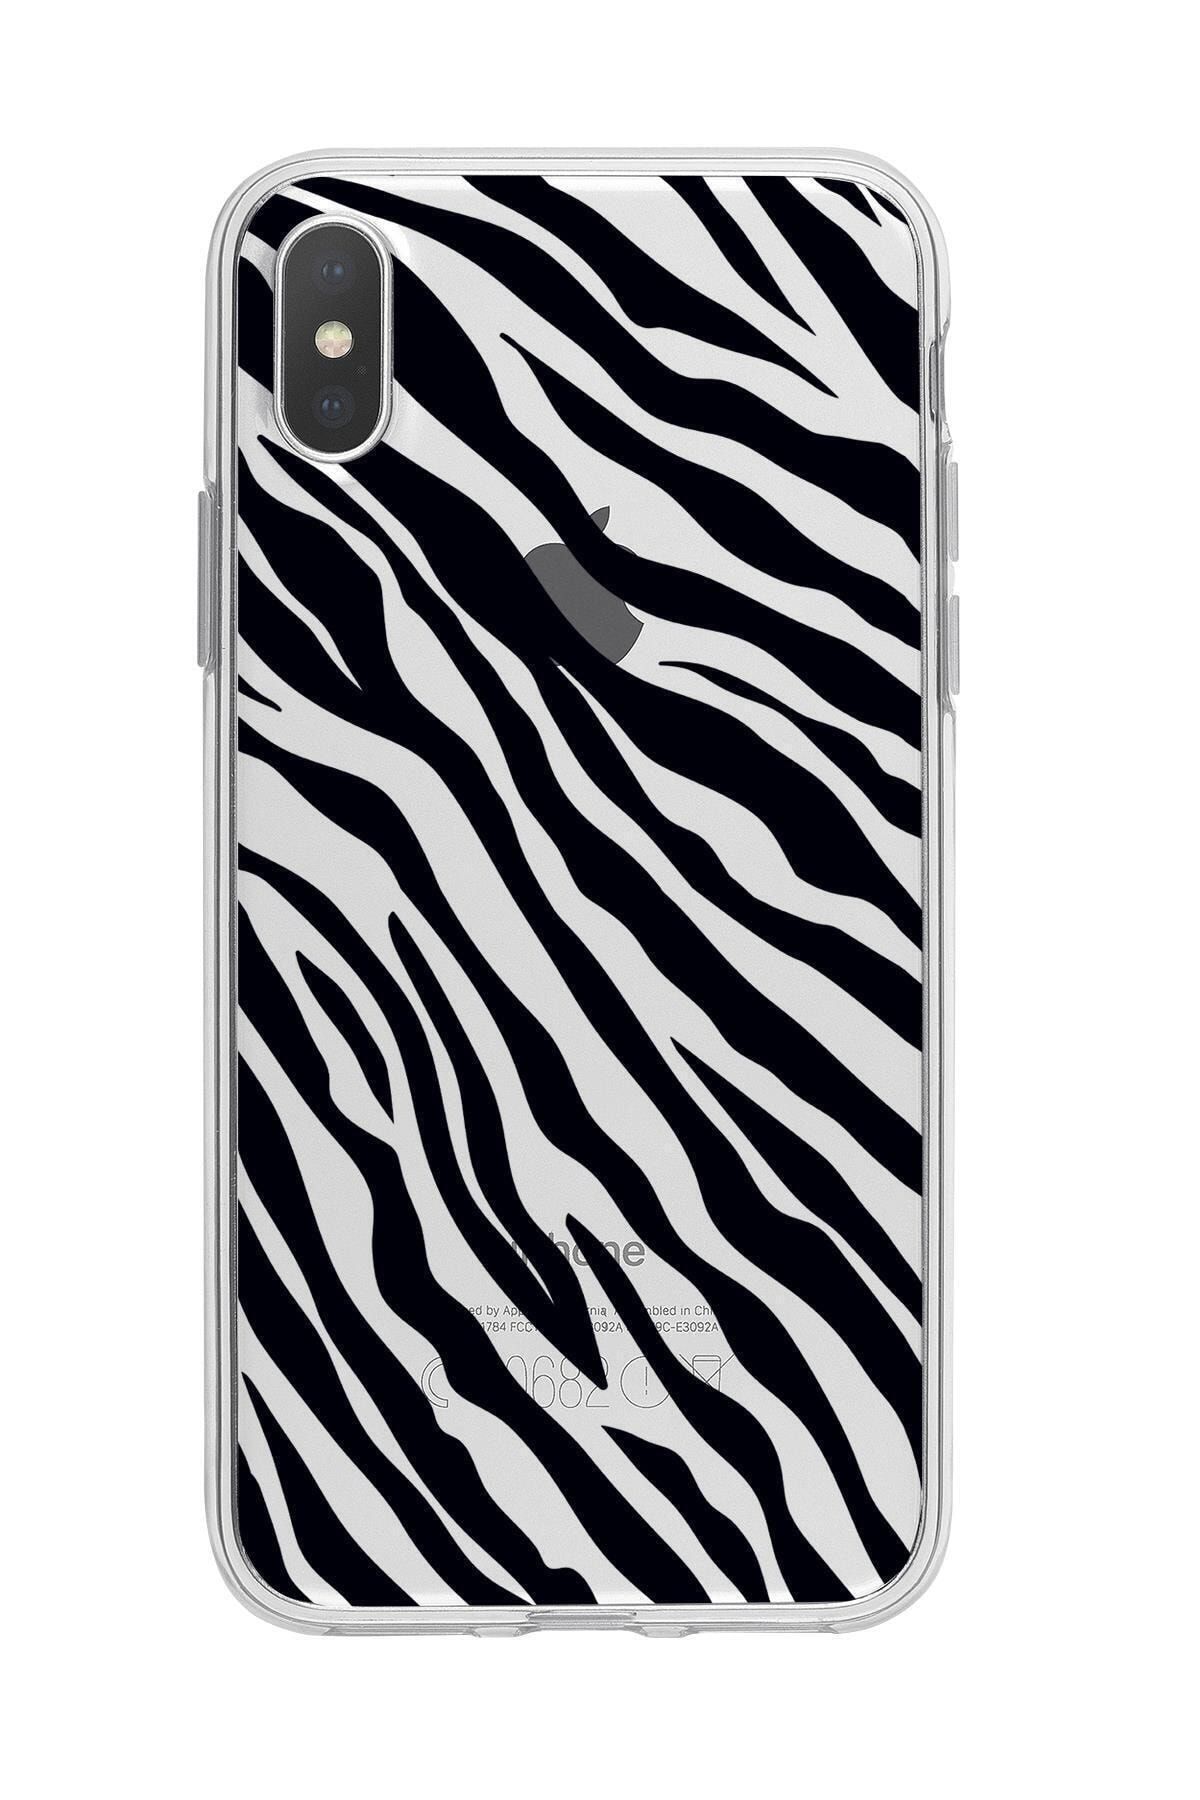 Syrox Iphone Xr Uyumlu Zebra Pattern Premium Şeffaf Silikon Kılıf Siyah Baskılı